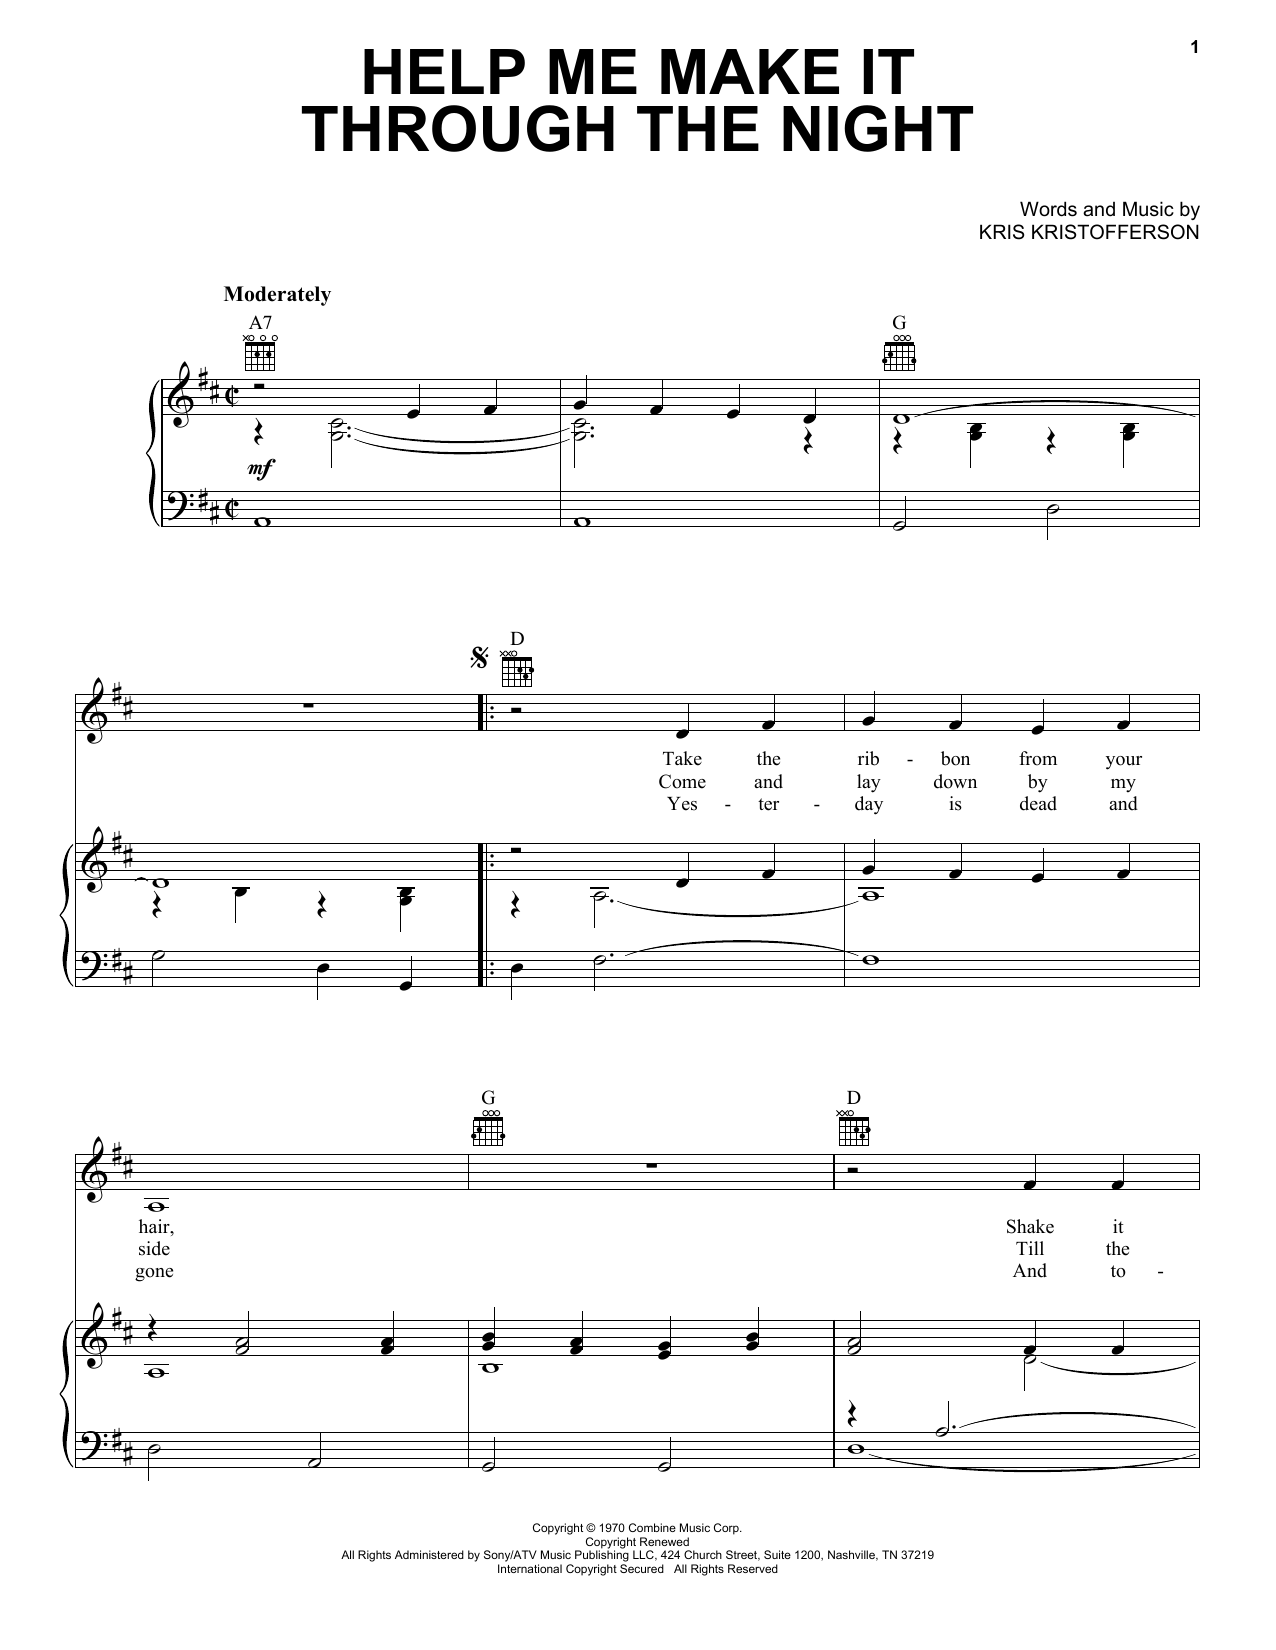 Kris Kristofferson Help Me Make It Through The Night Sheet Music Notes & Chords for Keyboard - Download or Print PDF